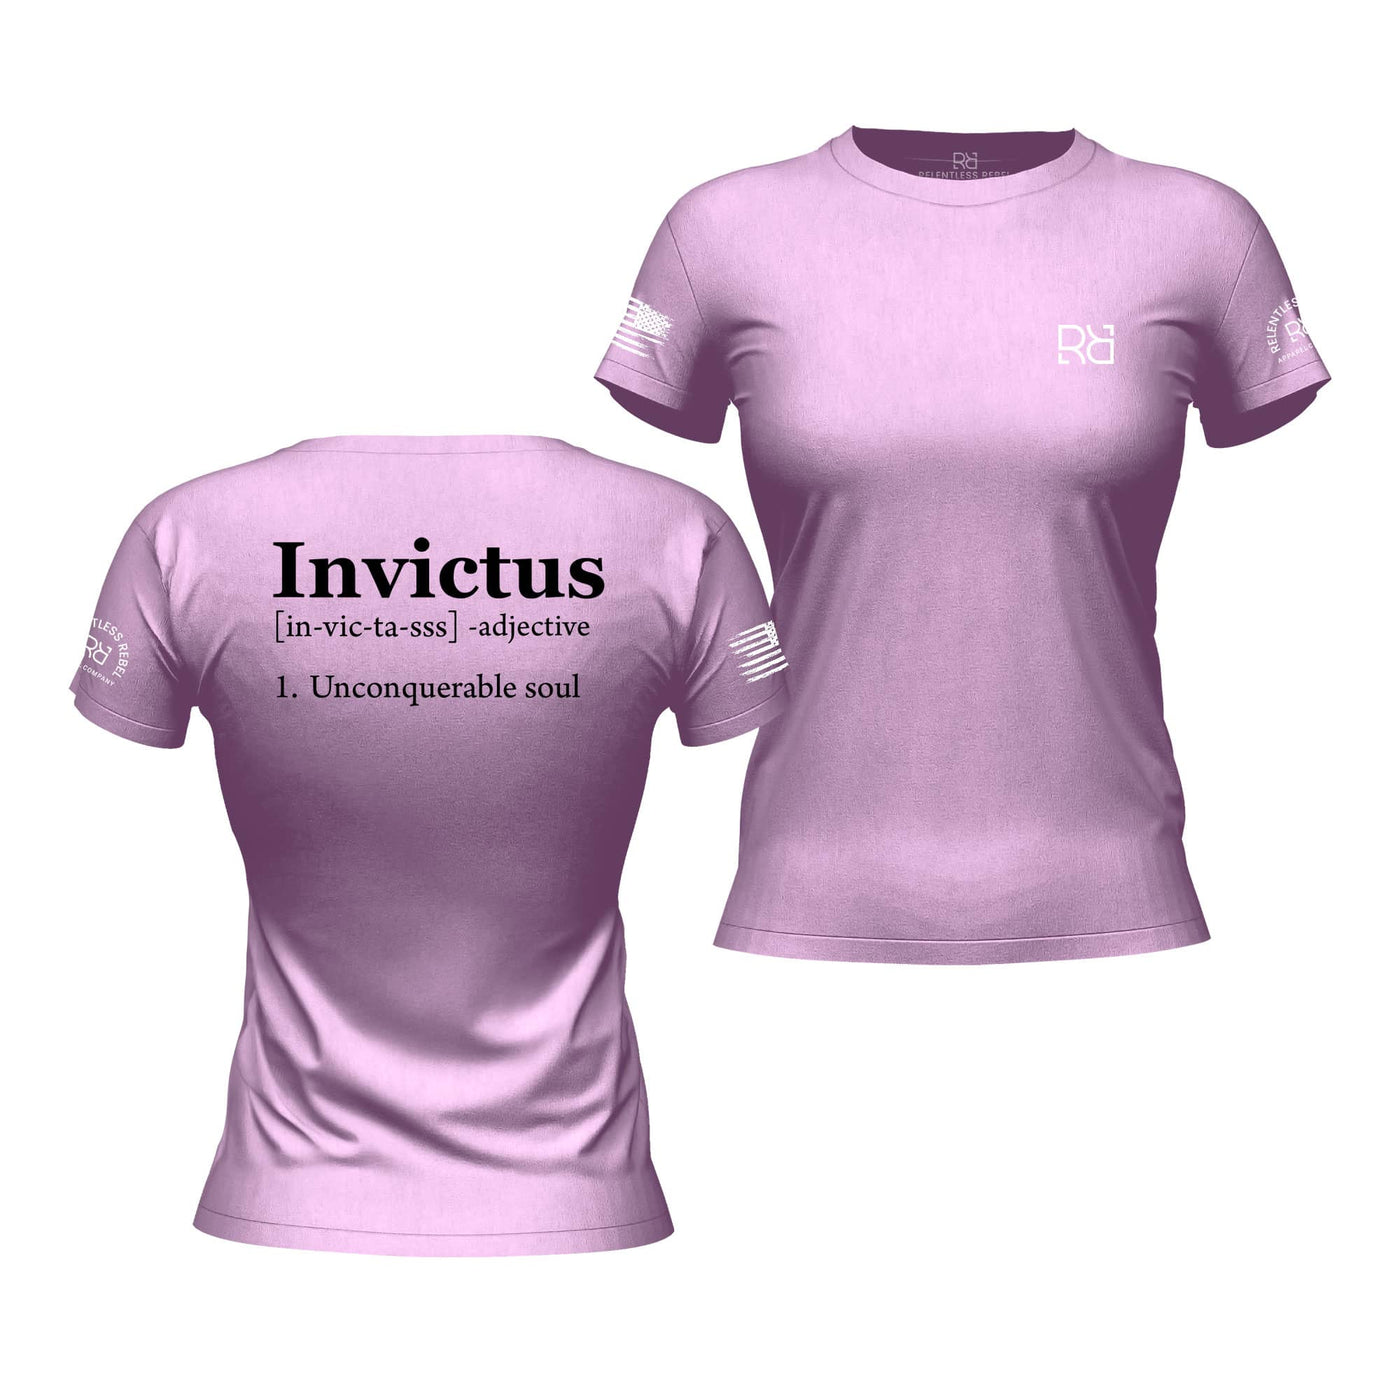 Prism Lilac Women's Invictus Back Design Tee